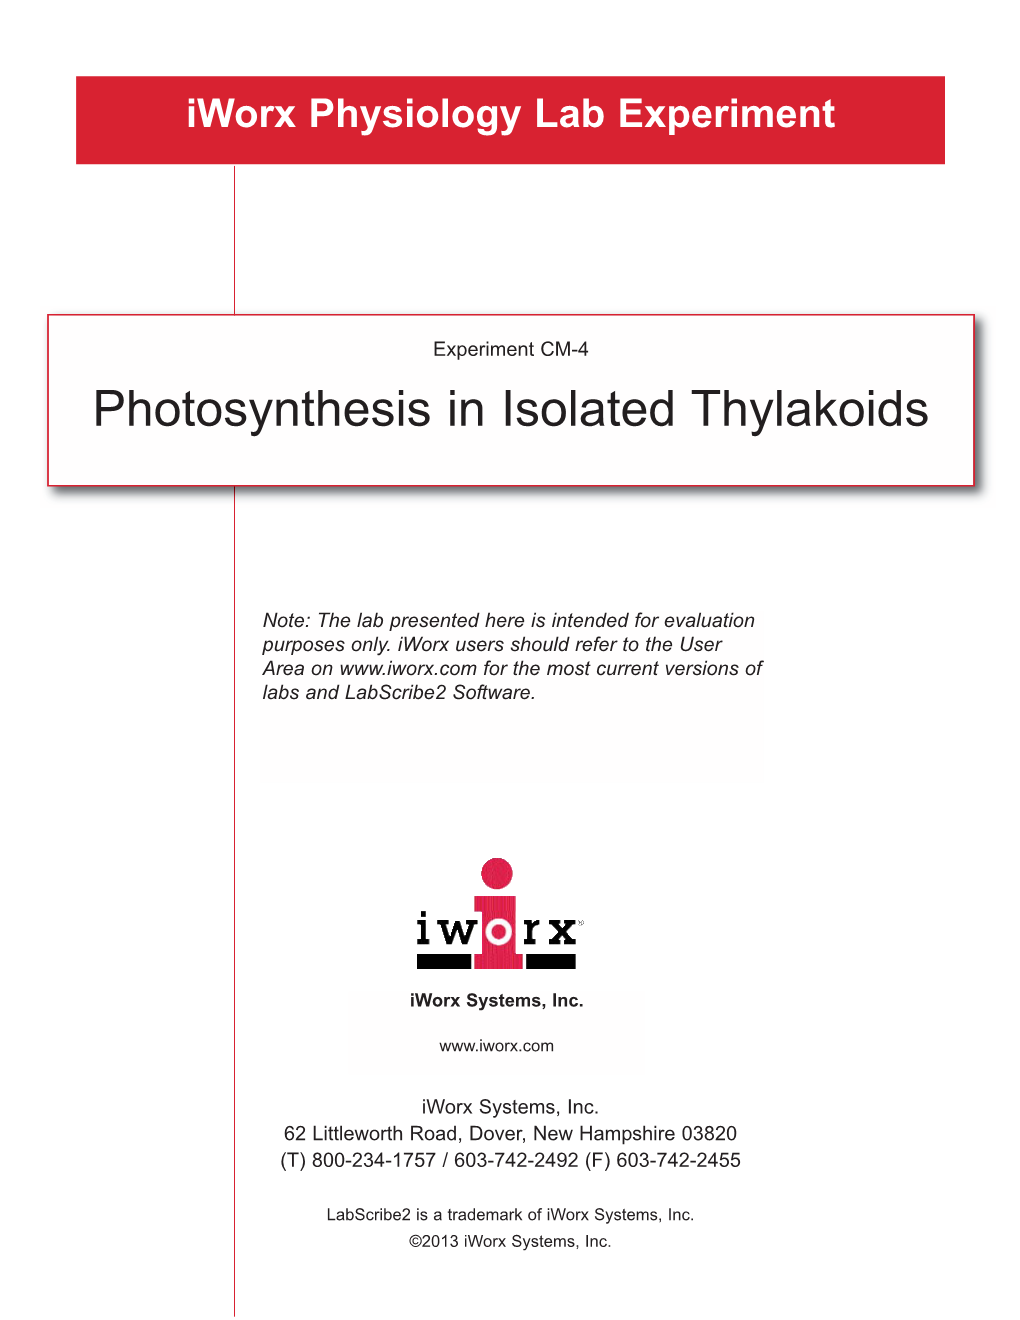 Photosynthesis in Isolated Thylakoids